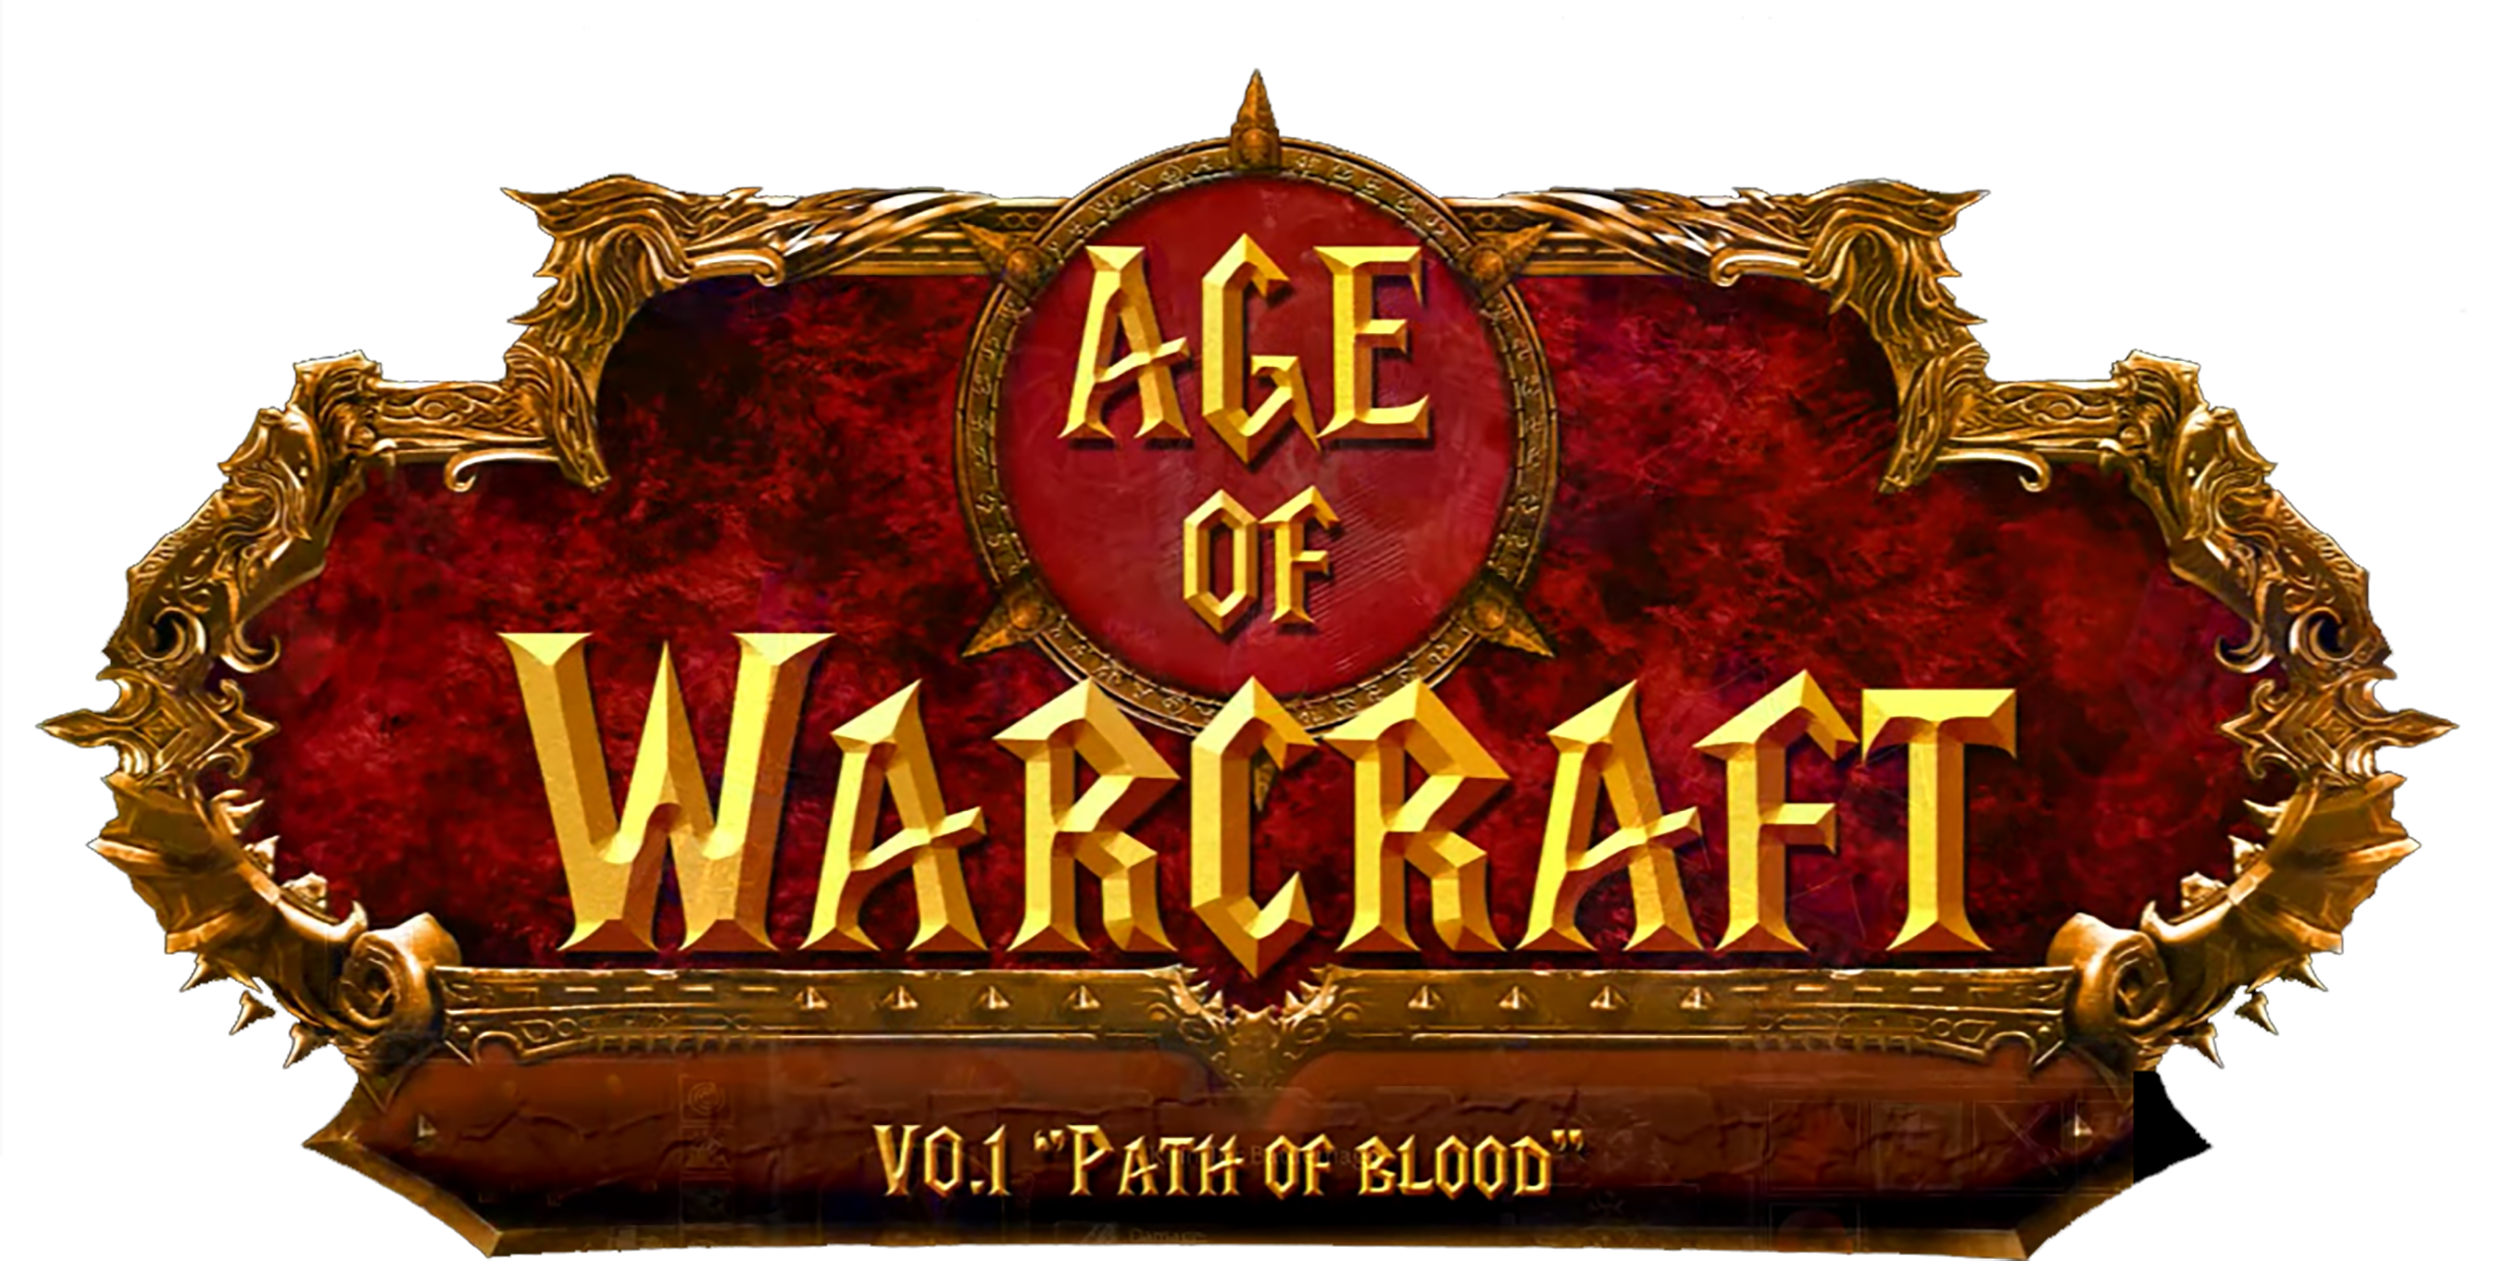 World of Warcraft. World of Warcraft Fashion. Warcraft 3 Reforged модель Джайна. World of Warcraft logo PNG. Вов том 3